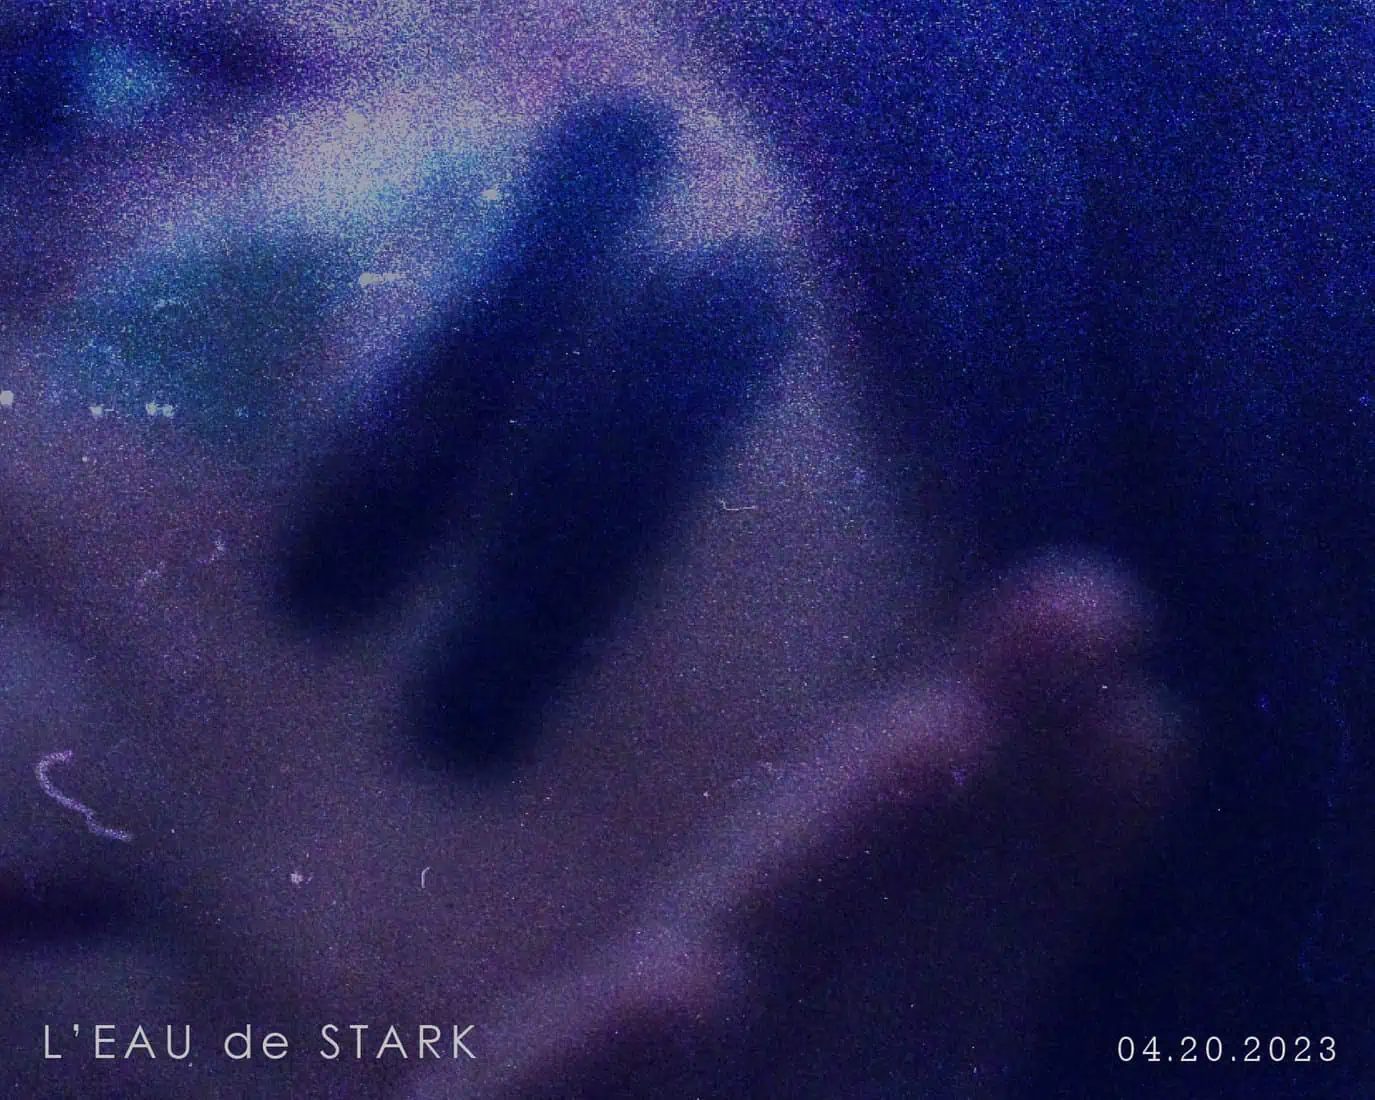 L'Eau de Stark - New Short Film by Clinton and Loni Stark